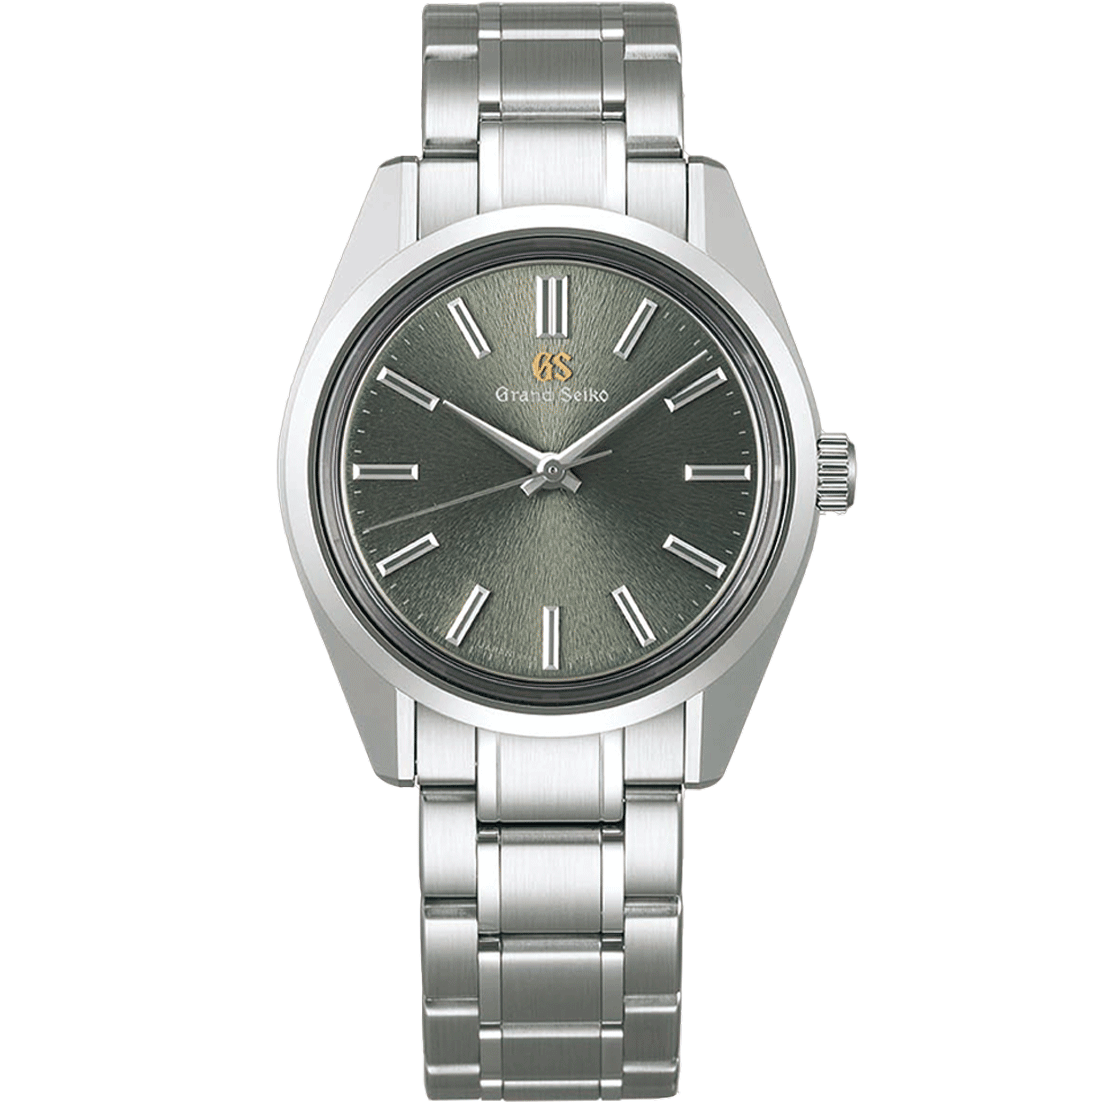 Grand Seiko SBGW311 green dial watch. 